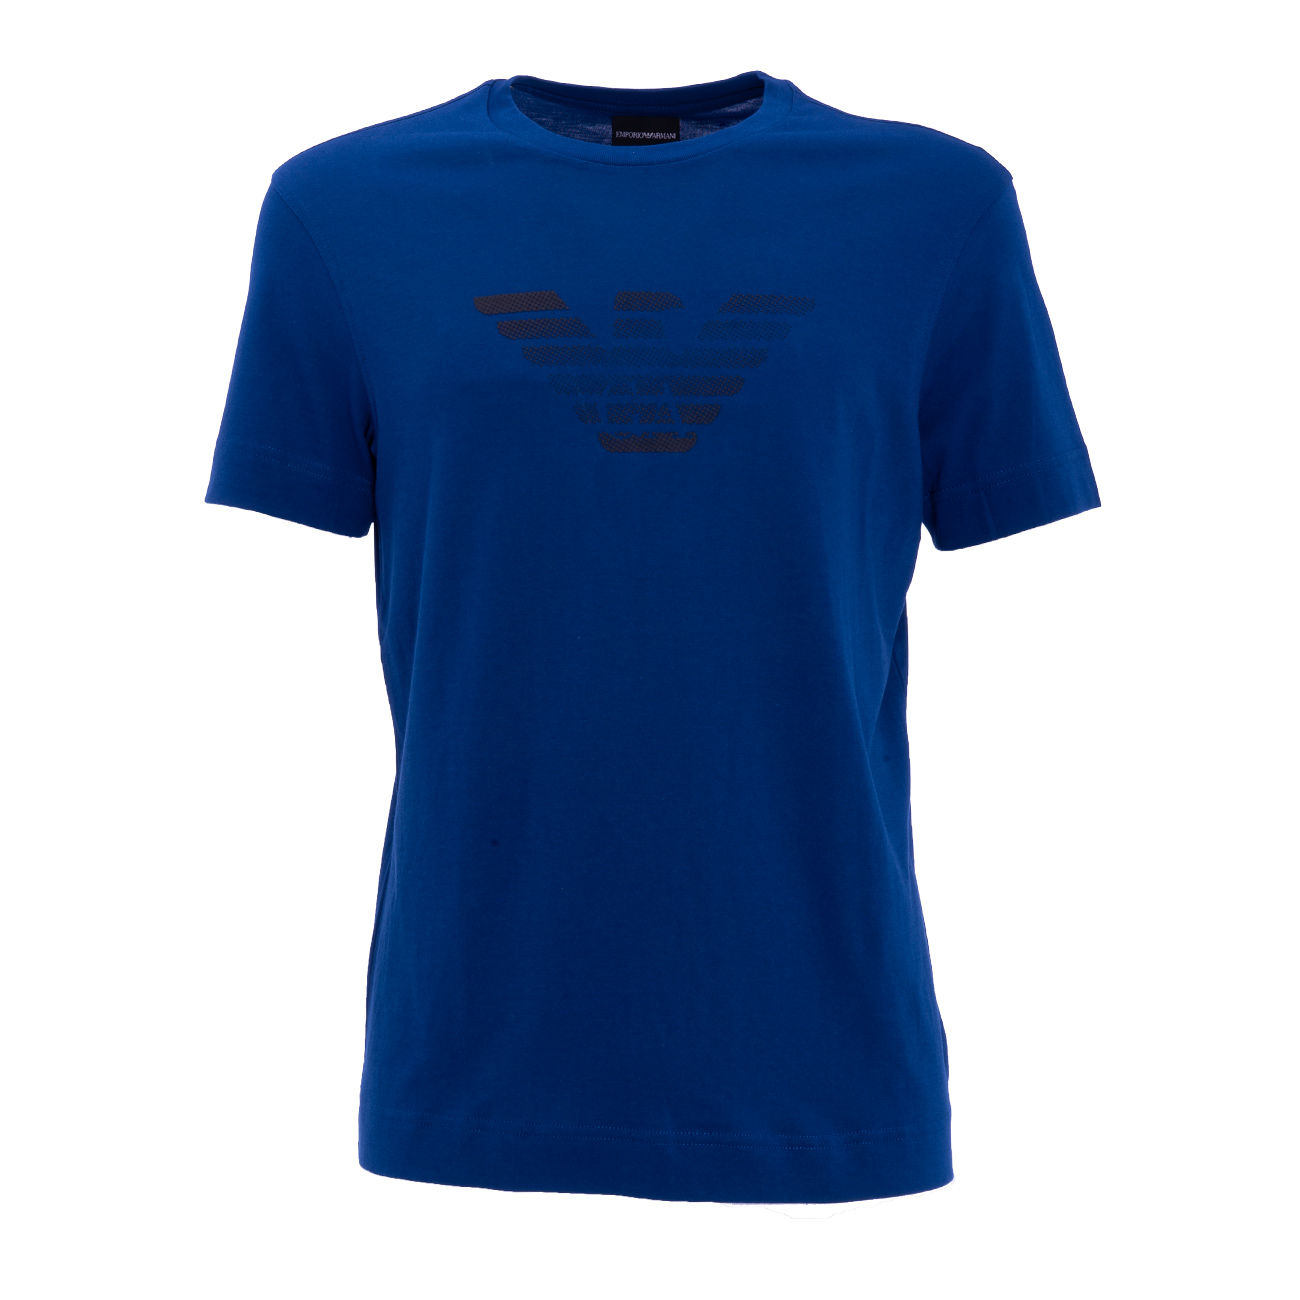 A0424 maglia uomo SANGUE MAROCCO BLU t-shirt sleeveless men